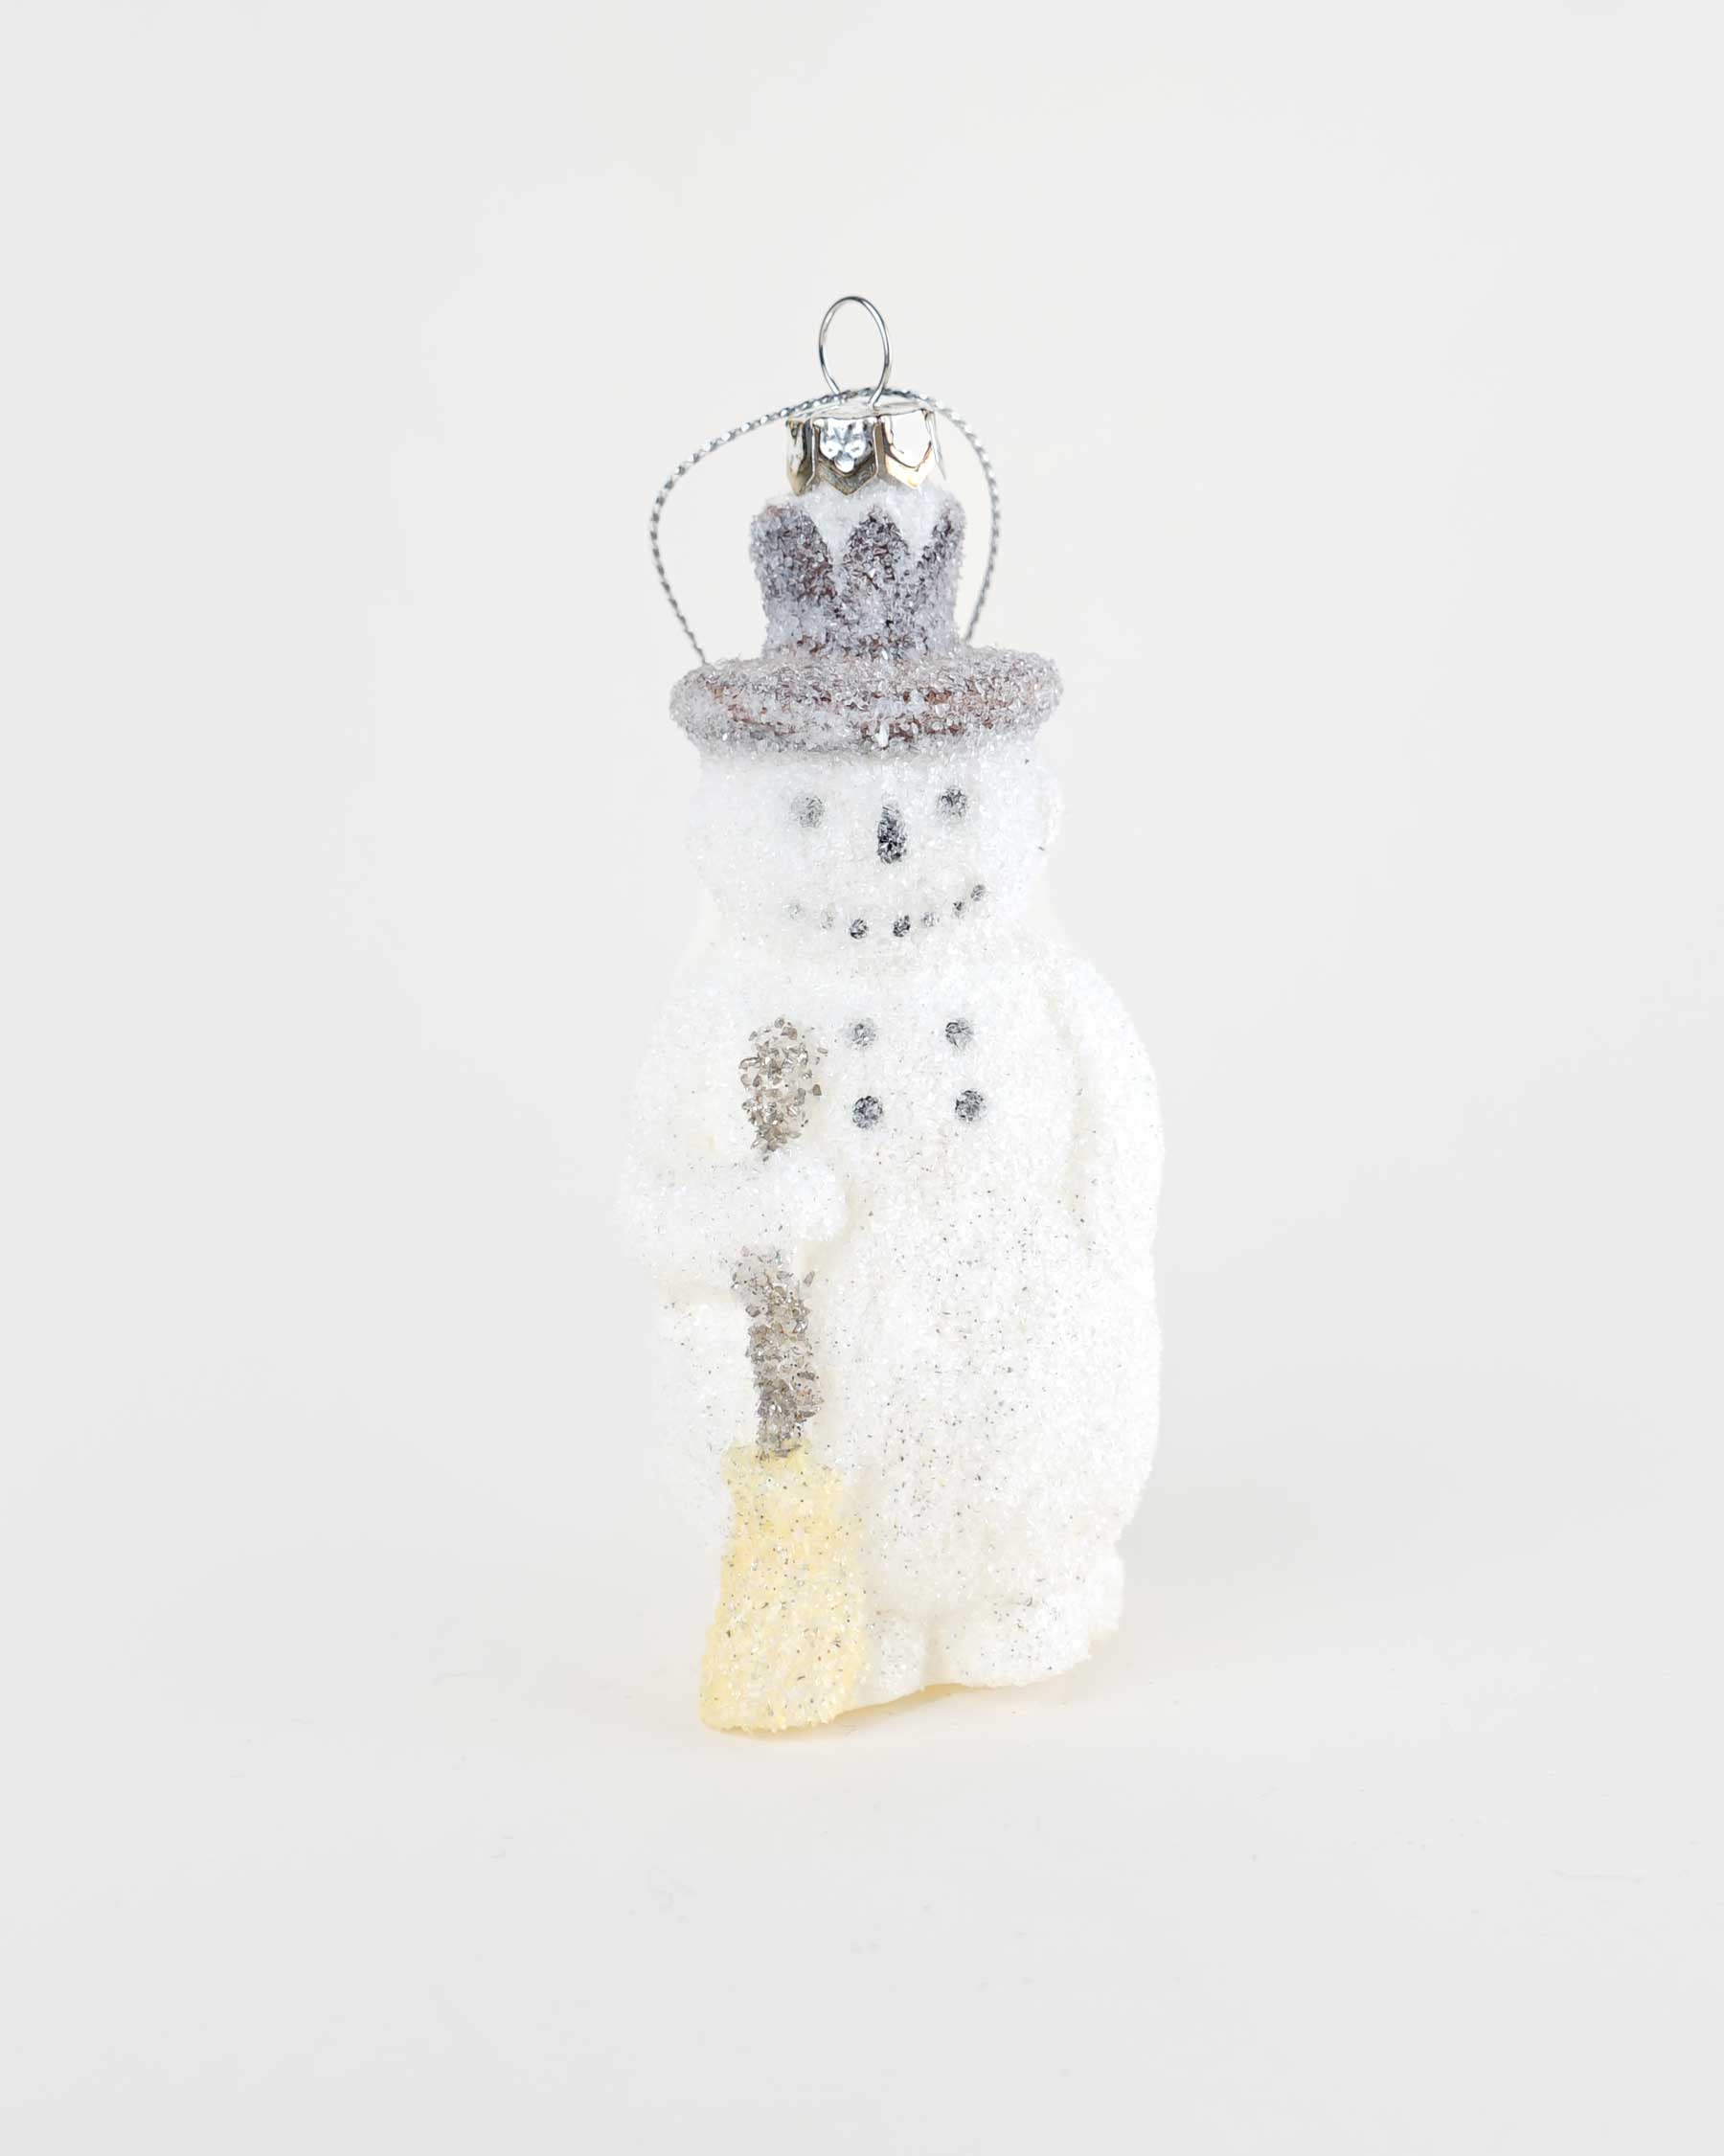 Victorian Snowman Ornament